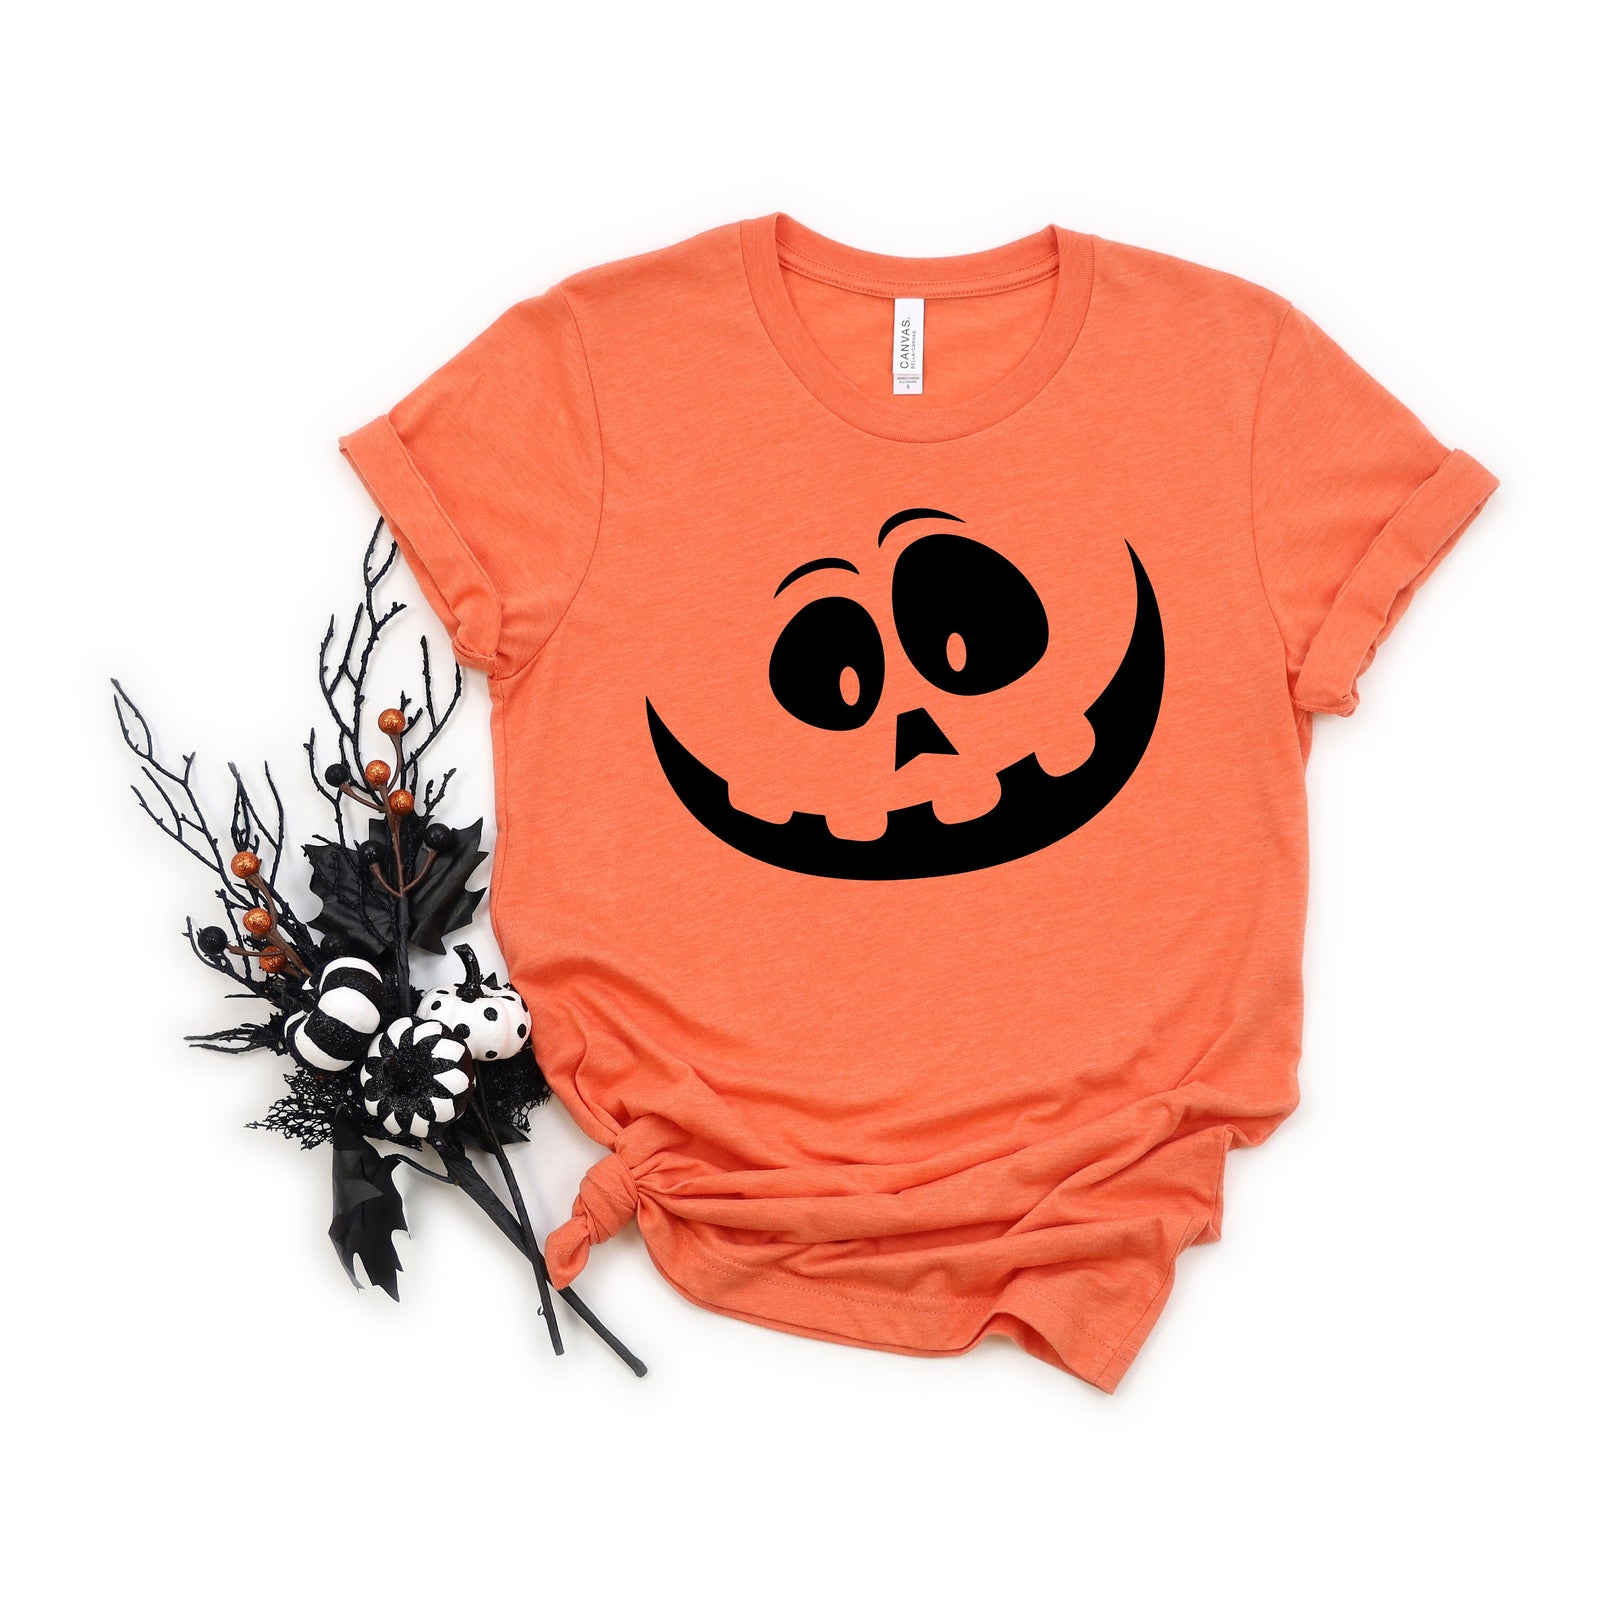 Smiling Pumpkin - Happy Halloween Adult T Shirt - Halloween - Office - School - Funny T Shirt